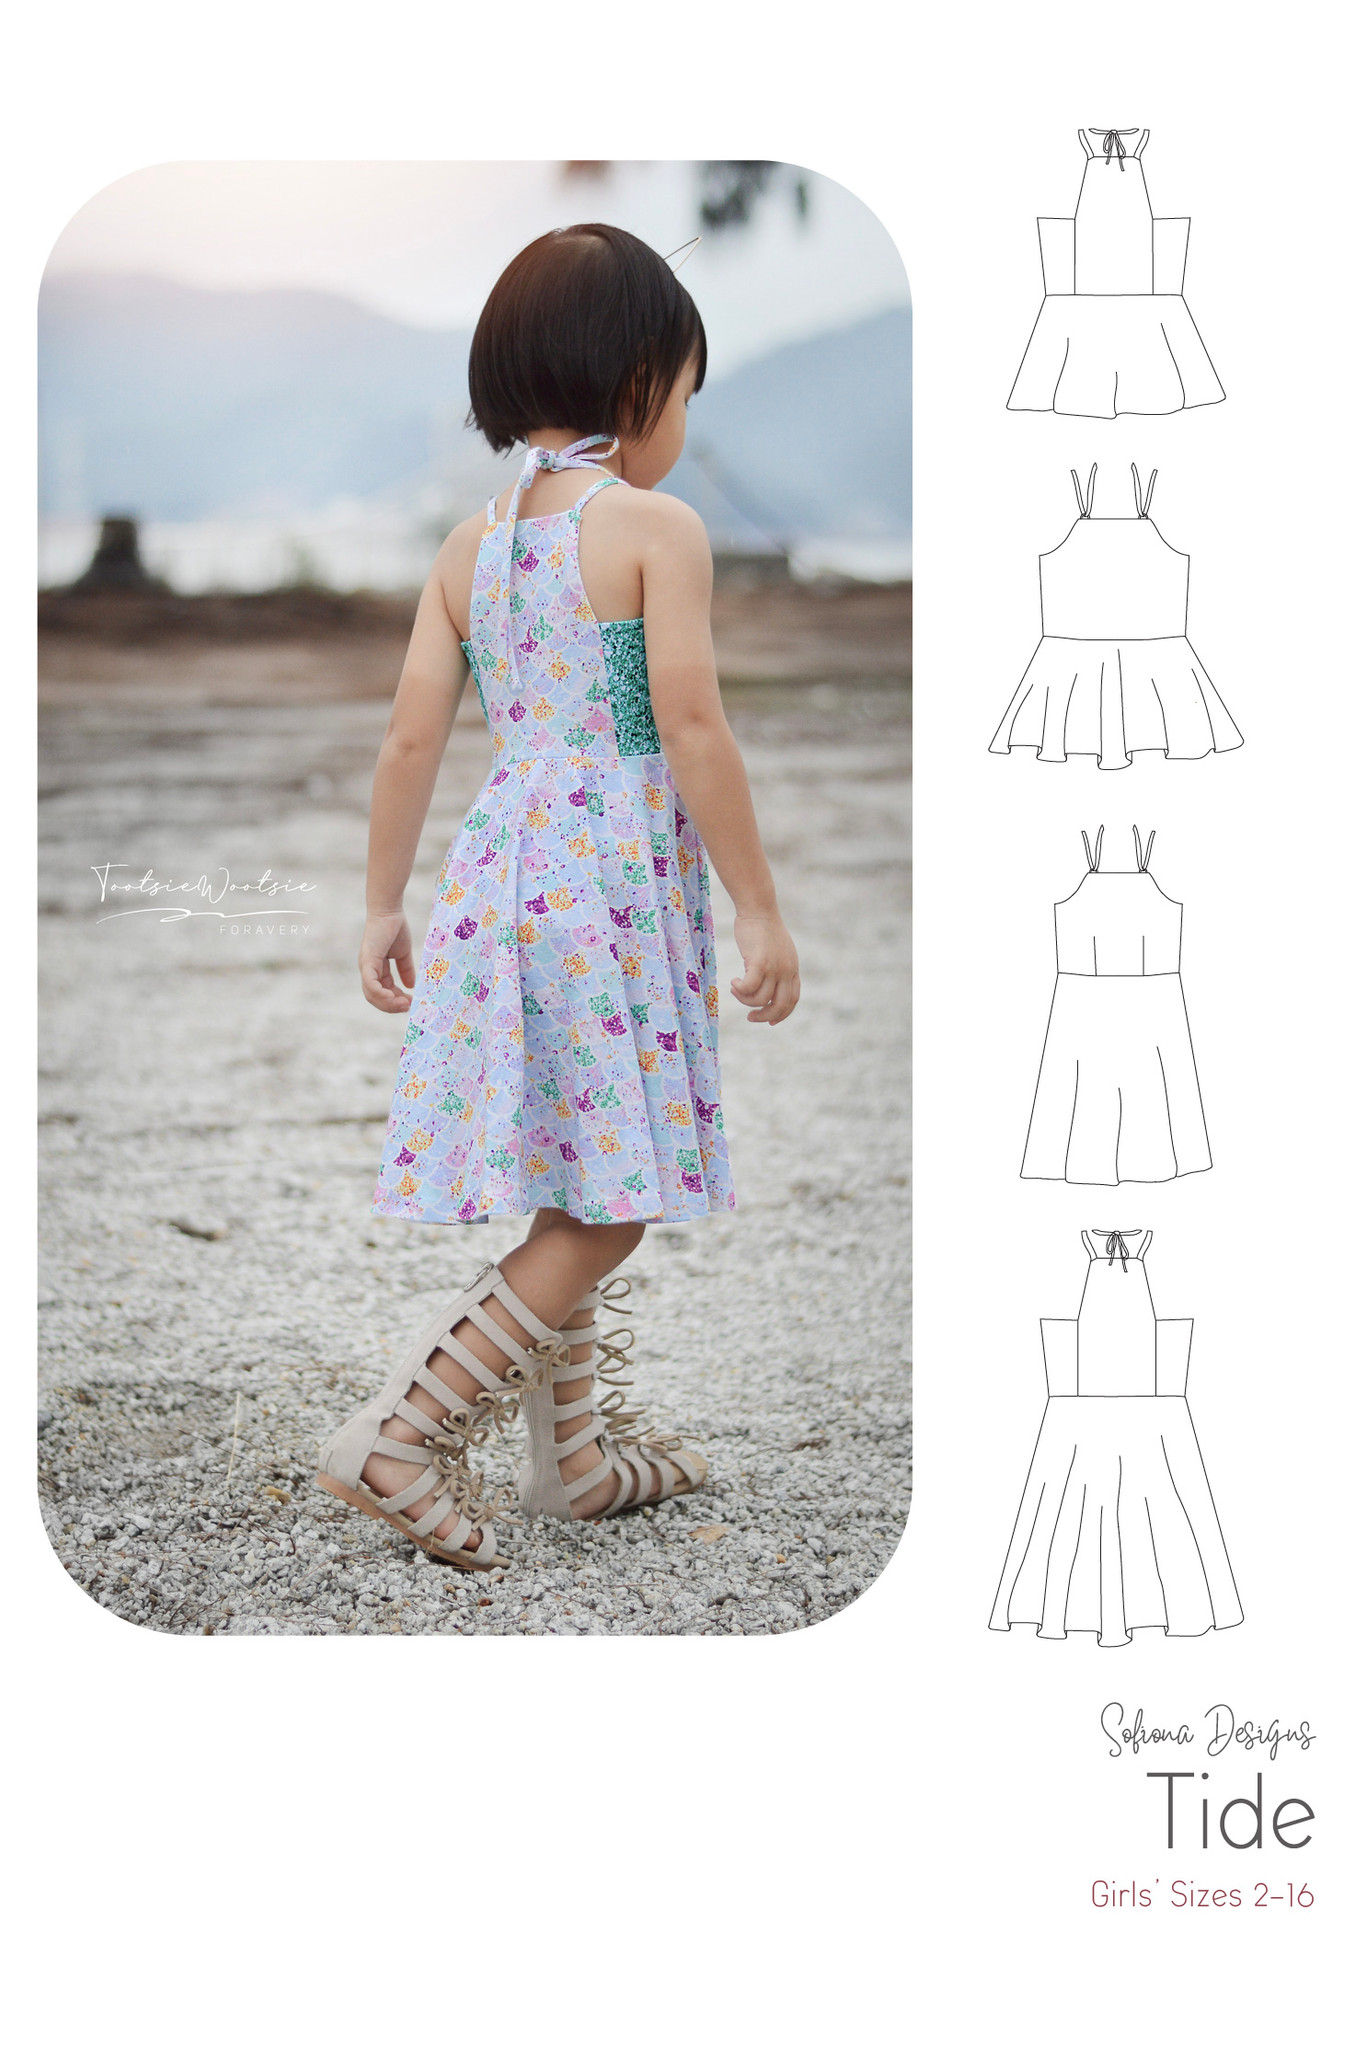 Tide Halter Dress Top/PDF Pattern/Sofiona Designs